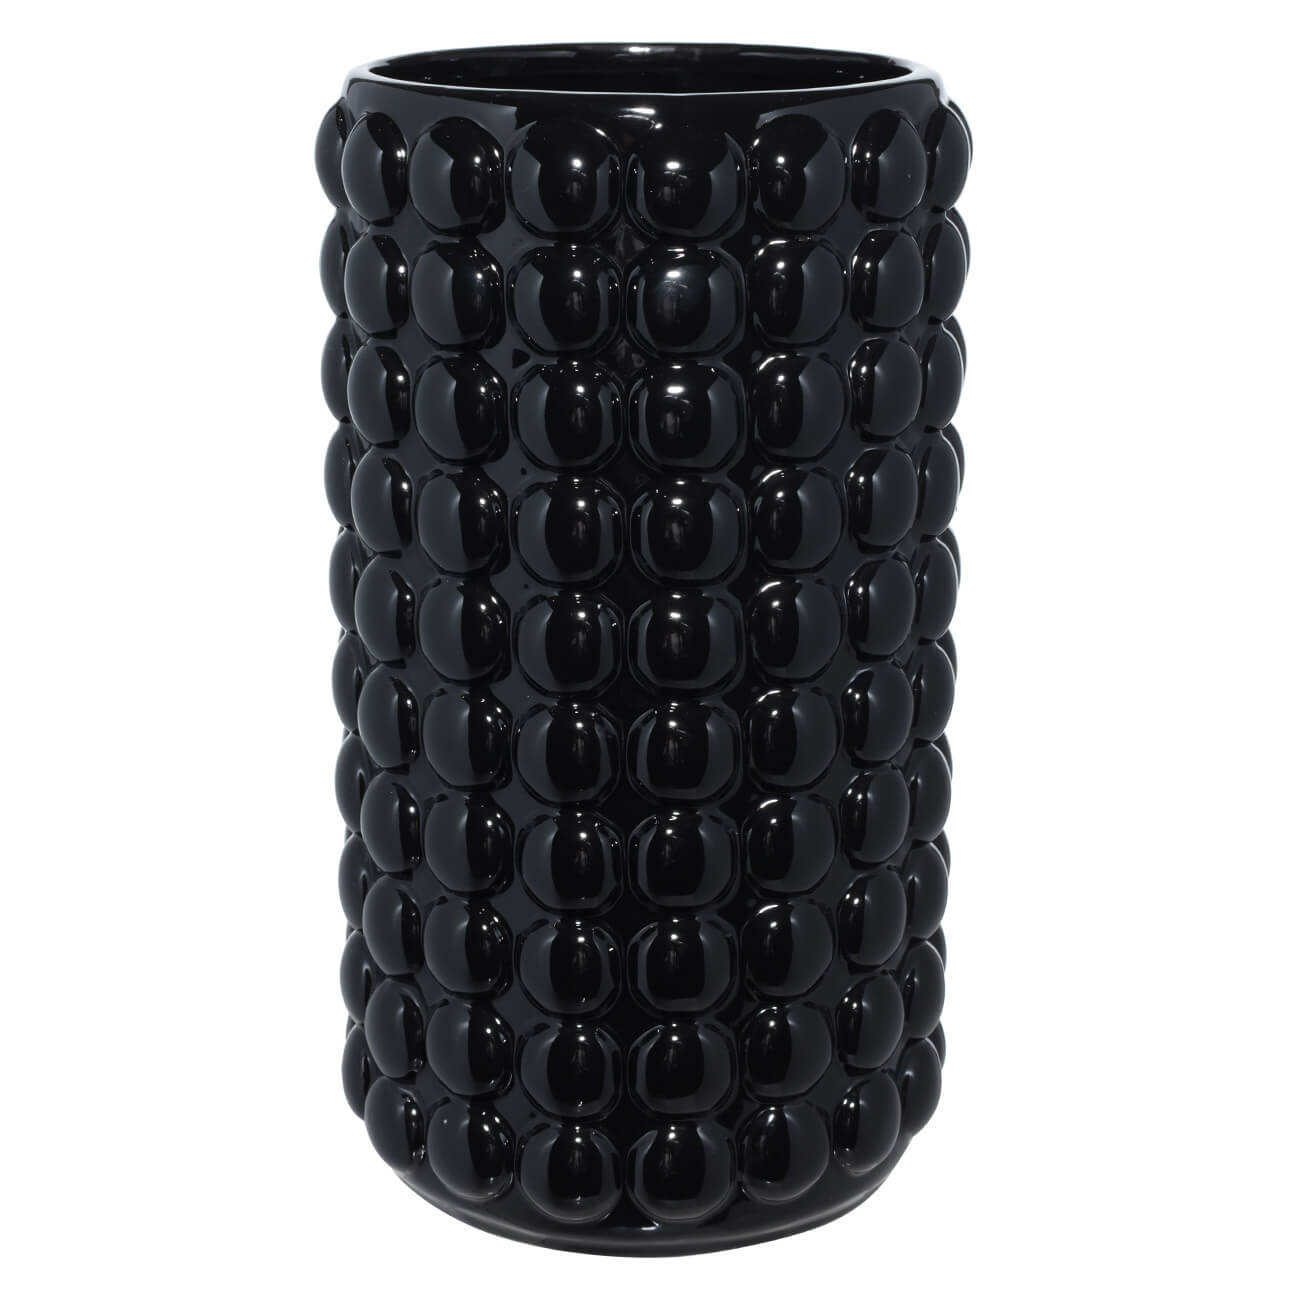 ваза керамика настольная 32 см канны y4 7258 черная Ваза для цветов, 24 см, керамика, черная, Пузыри, Bubbly